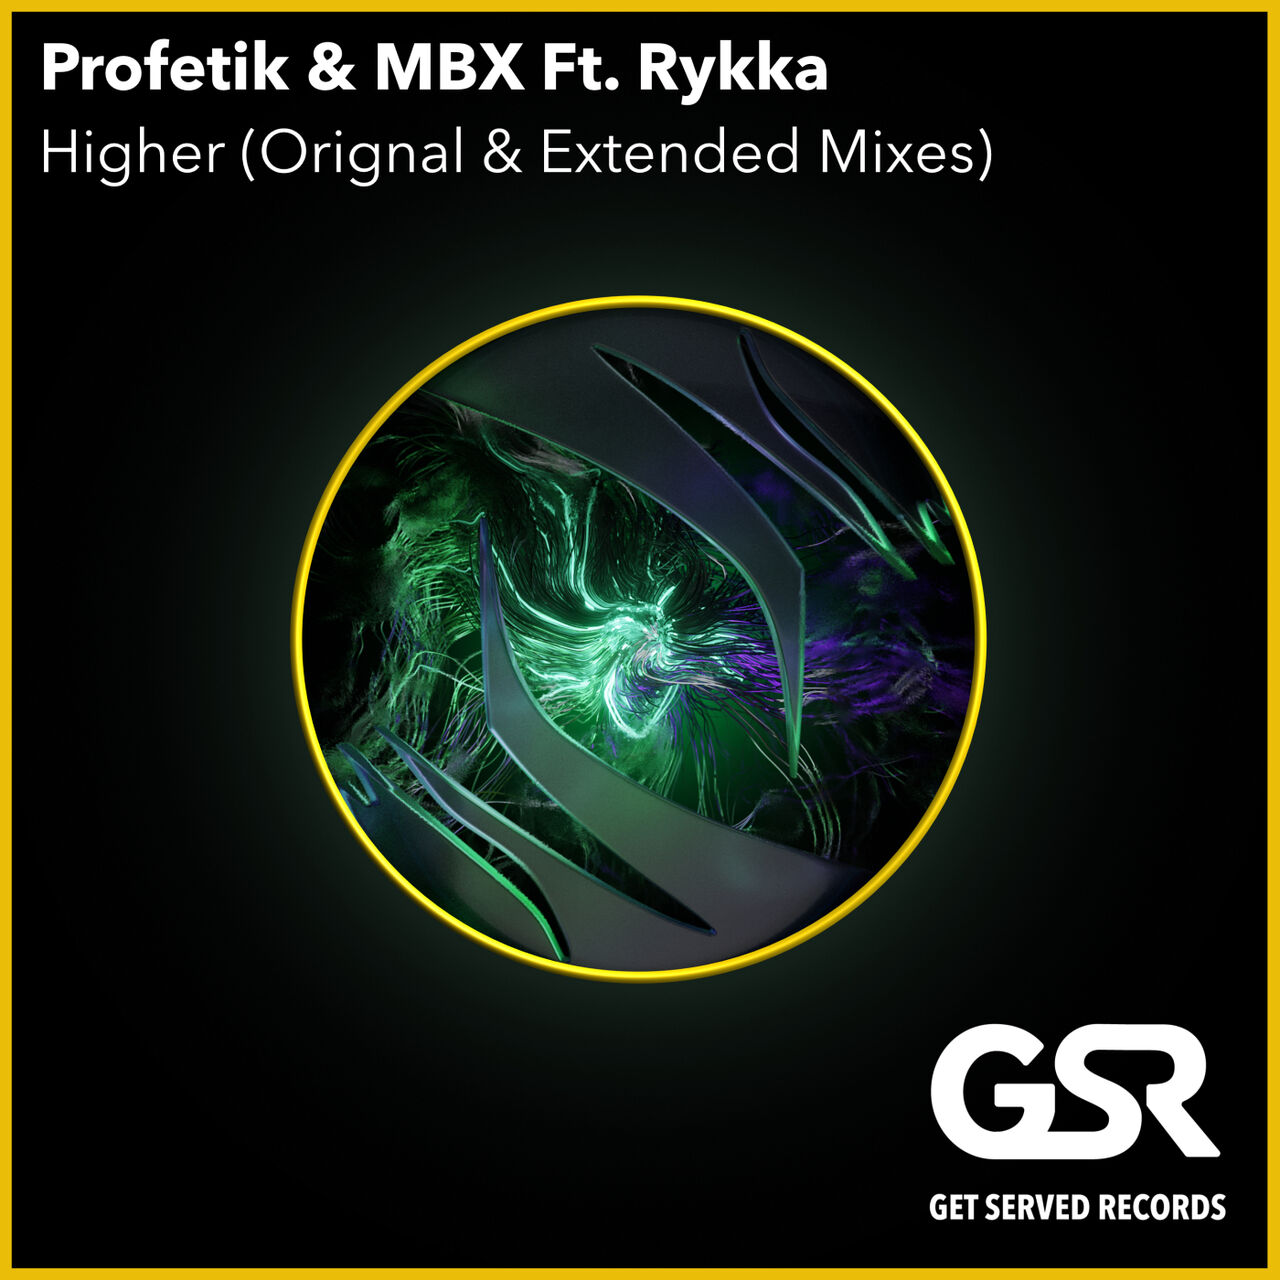 Profetik & MBX featuring Rykka — Higher cover artwork